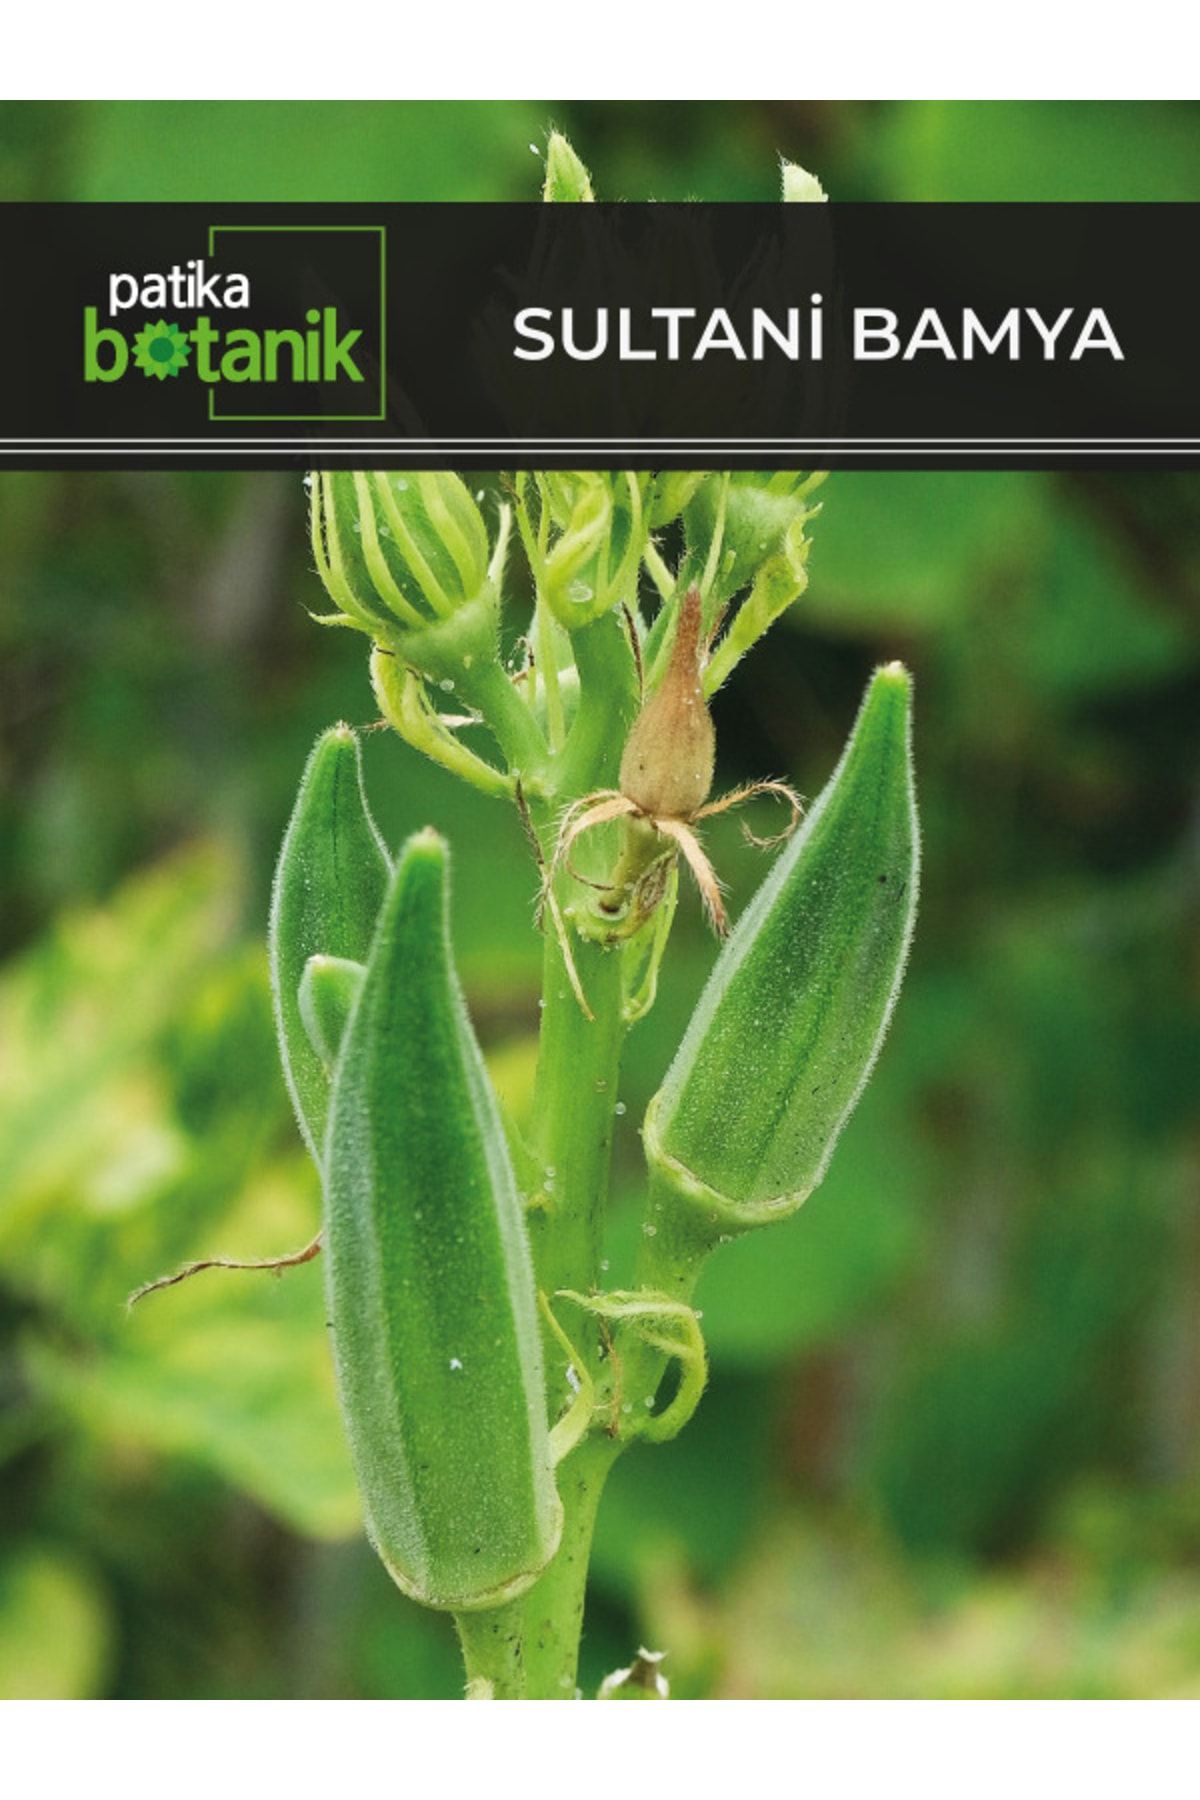 Patika Botanik 100 Adet Sultani Bamya Tohumu